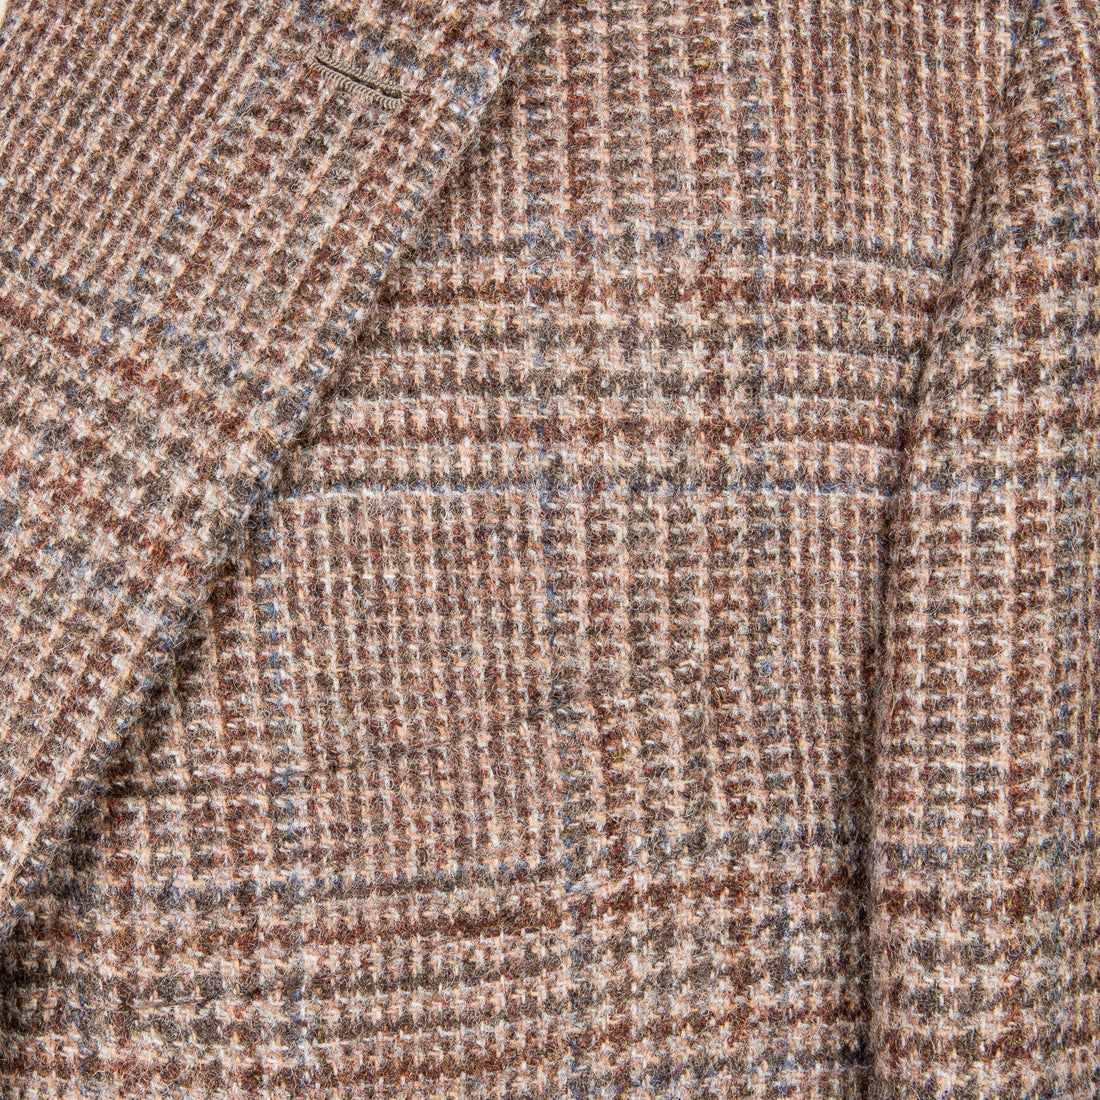 De Petrillo Posillipo Shetland Tweed Jacket Prince Of Wales Beige